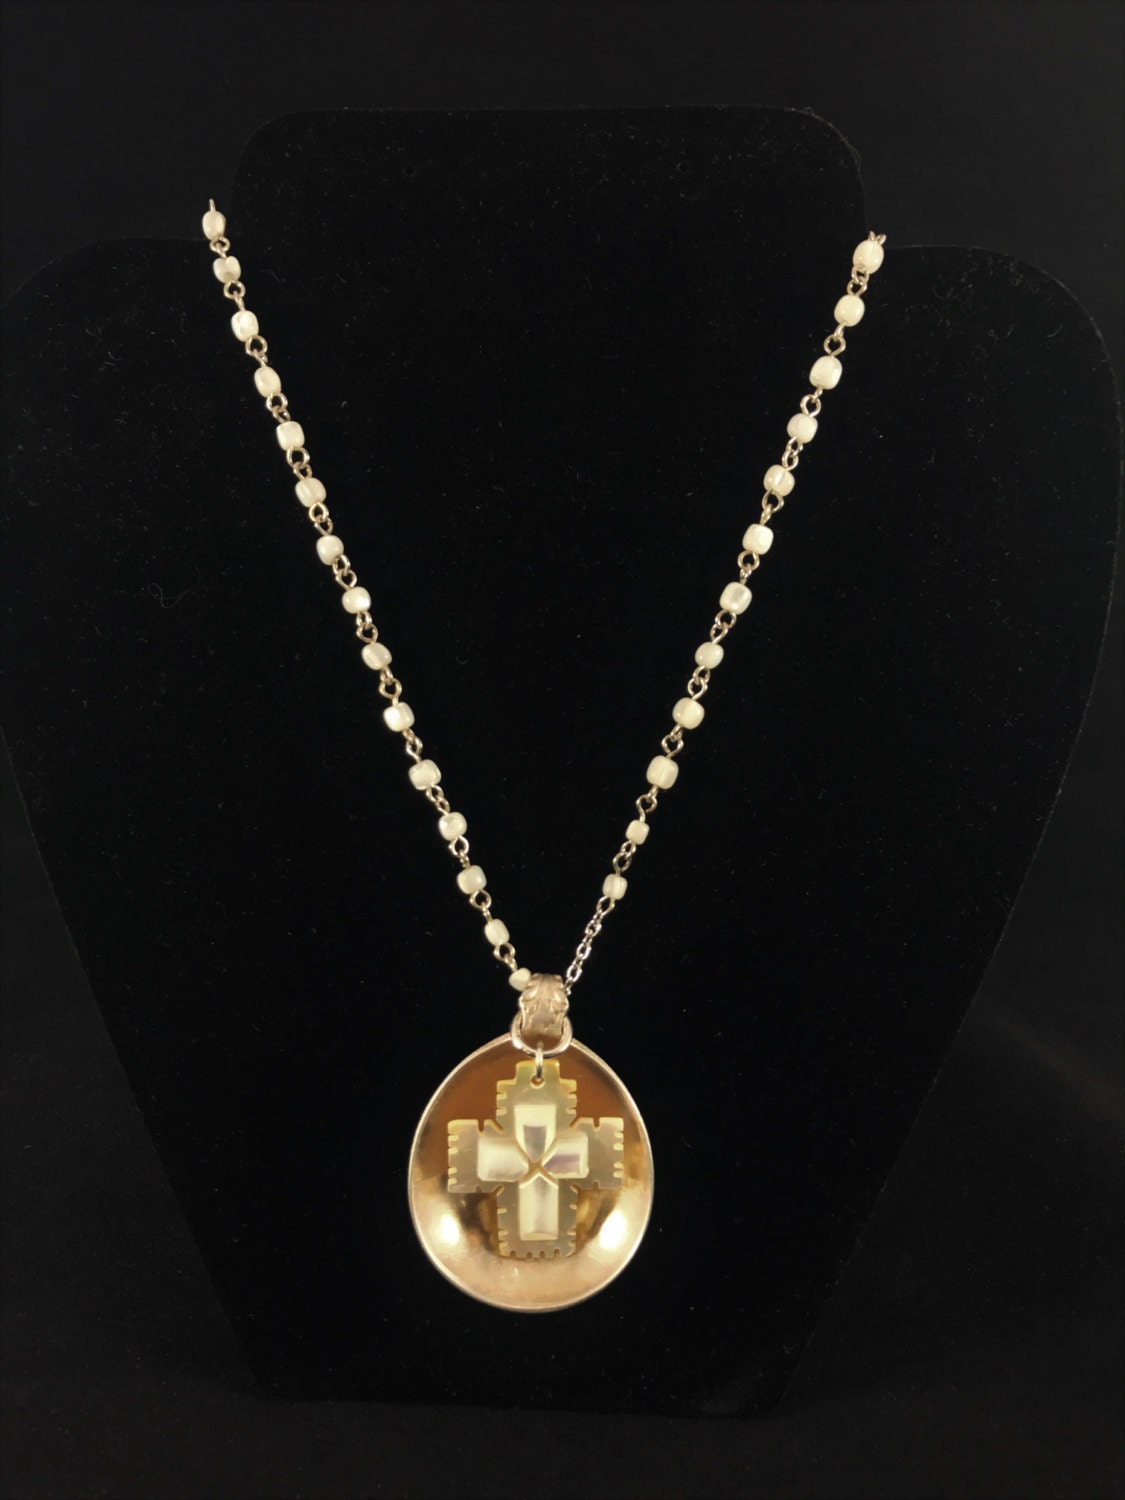 Pearl cross in silver spoon necklace | Etsy